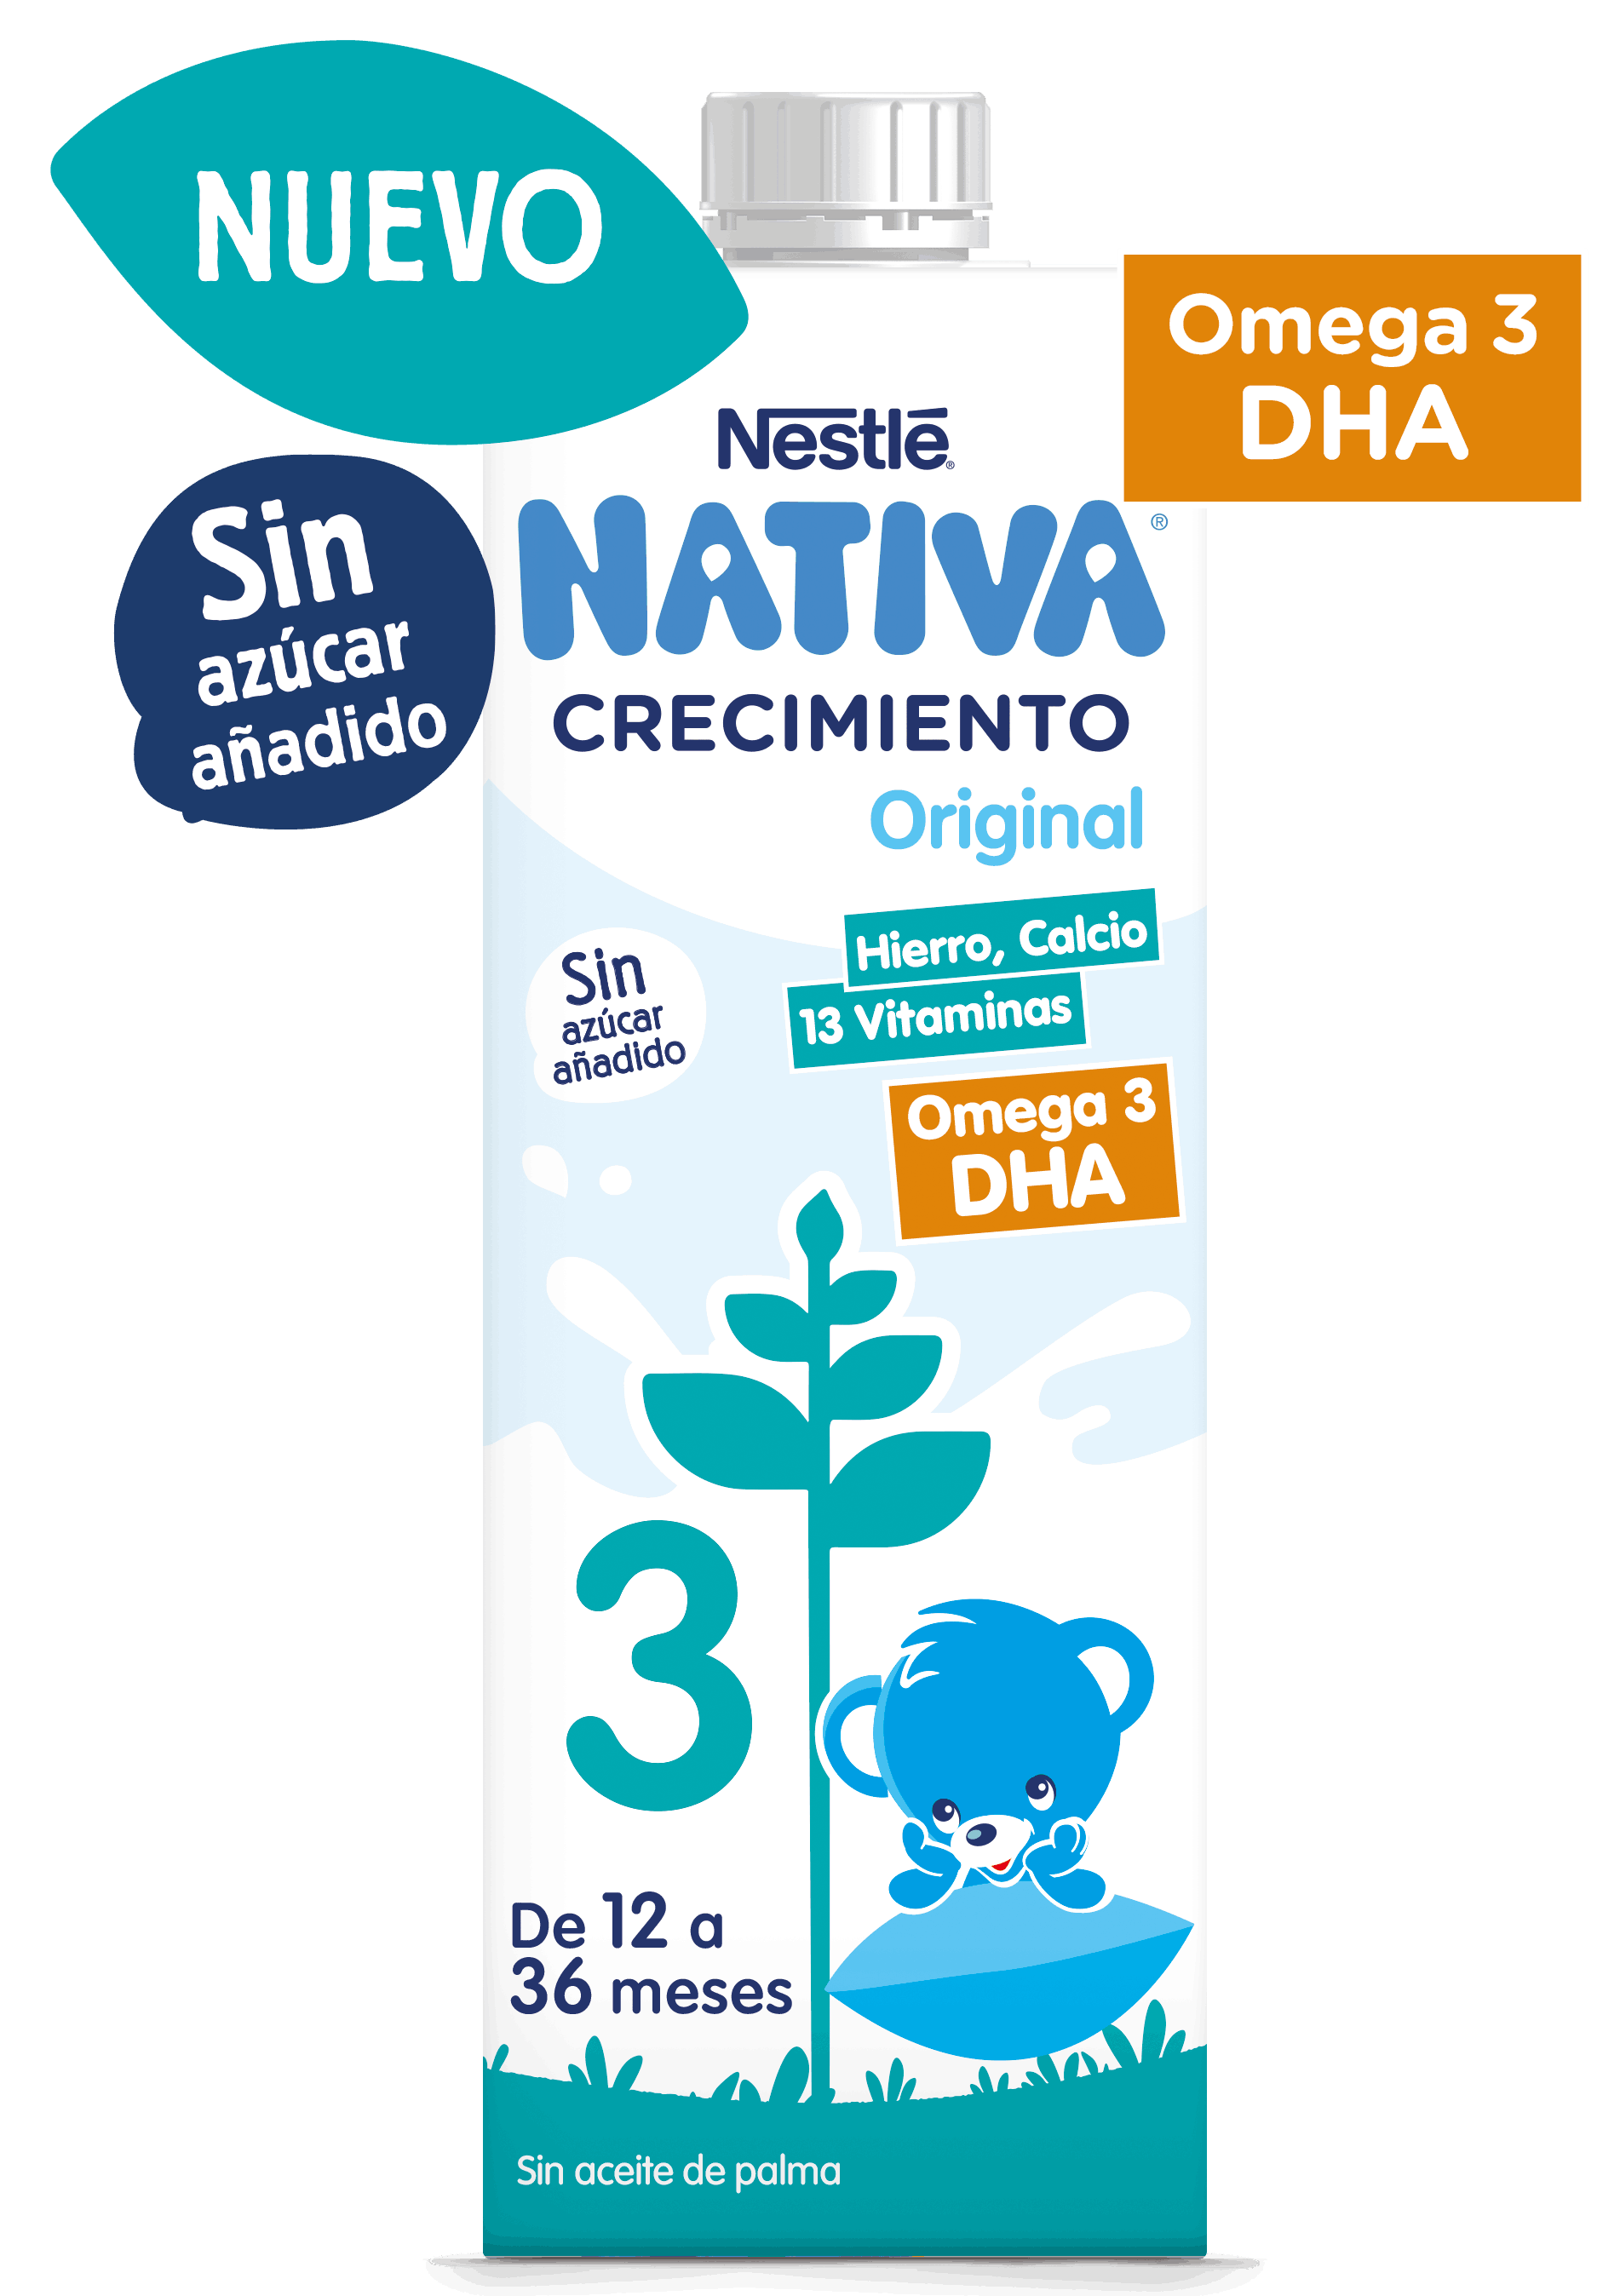 Nativa Nestlé Nativa Leche (3) de crecimiento con cereales, de 12 a 36  meses nativa de Nestlé 6 x 1 l